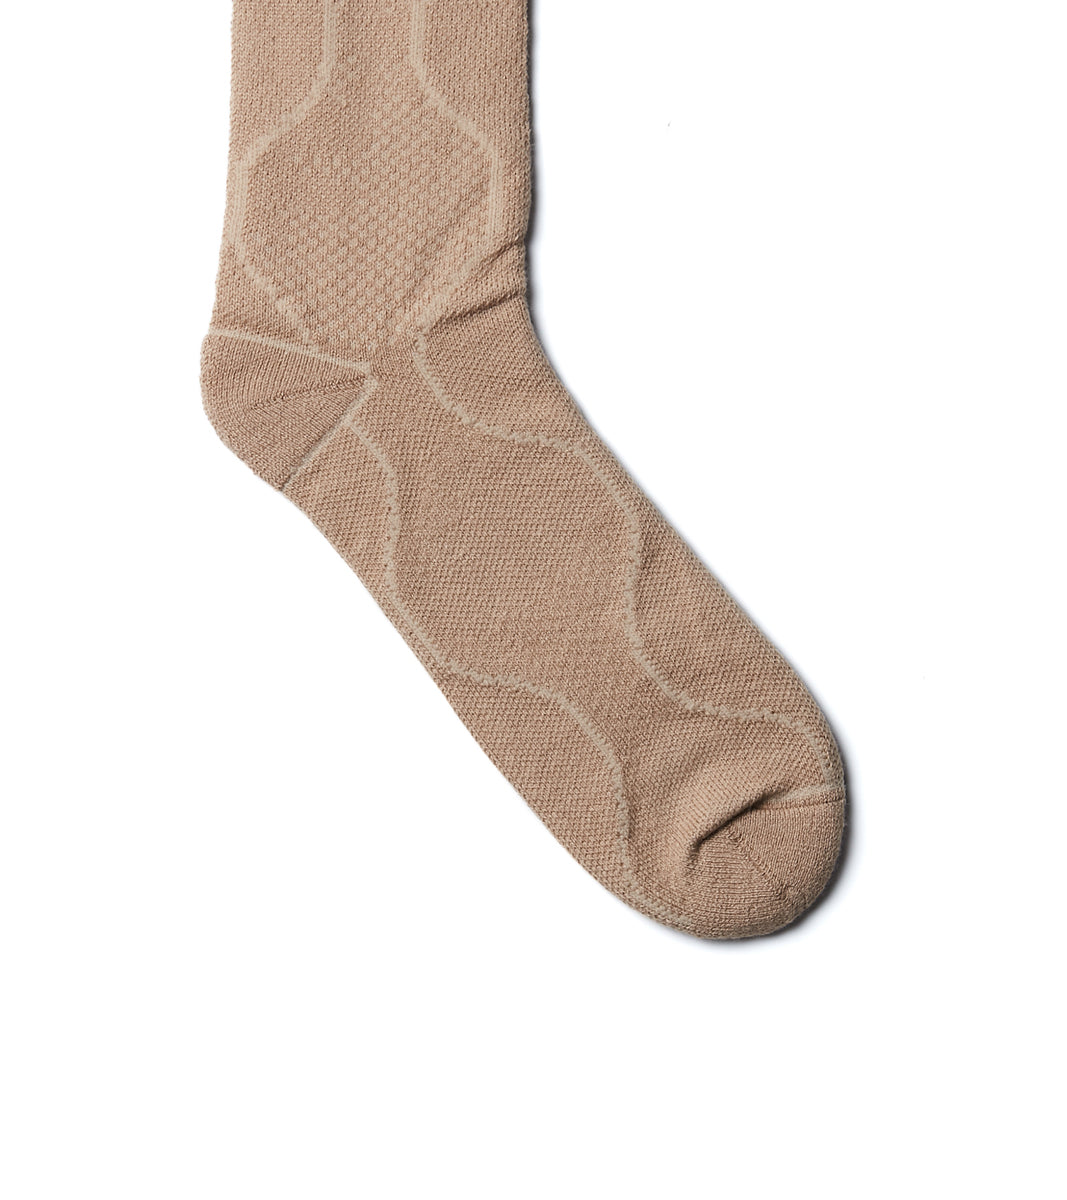 Digit No. casual cuff socks - Quilted Brn